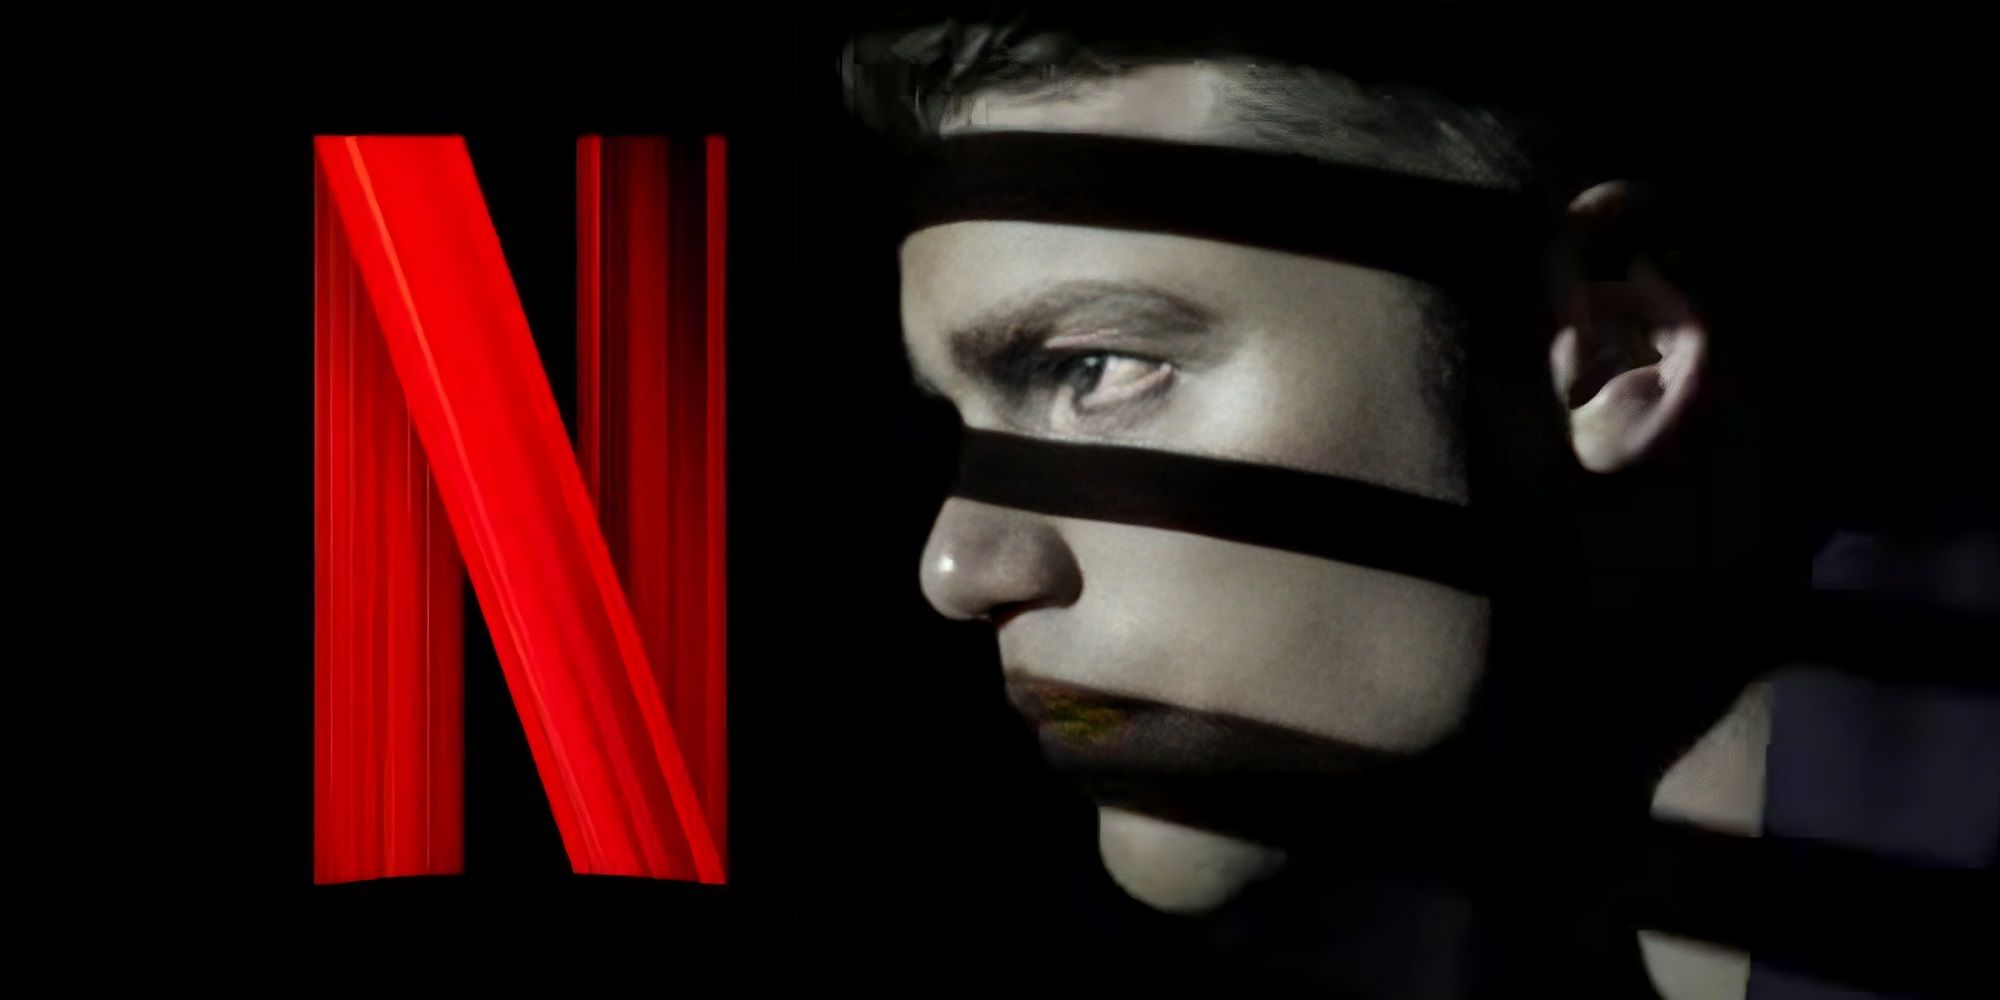 THE NIGHT AGENT Accepts It's Next Mission: Season 2 Renewal on Netflix